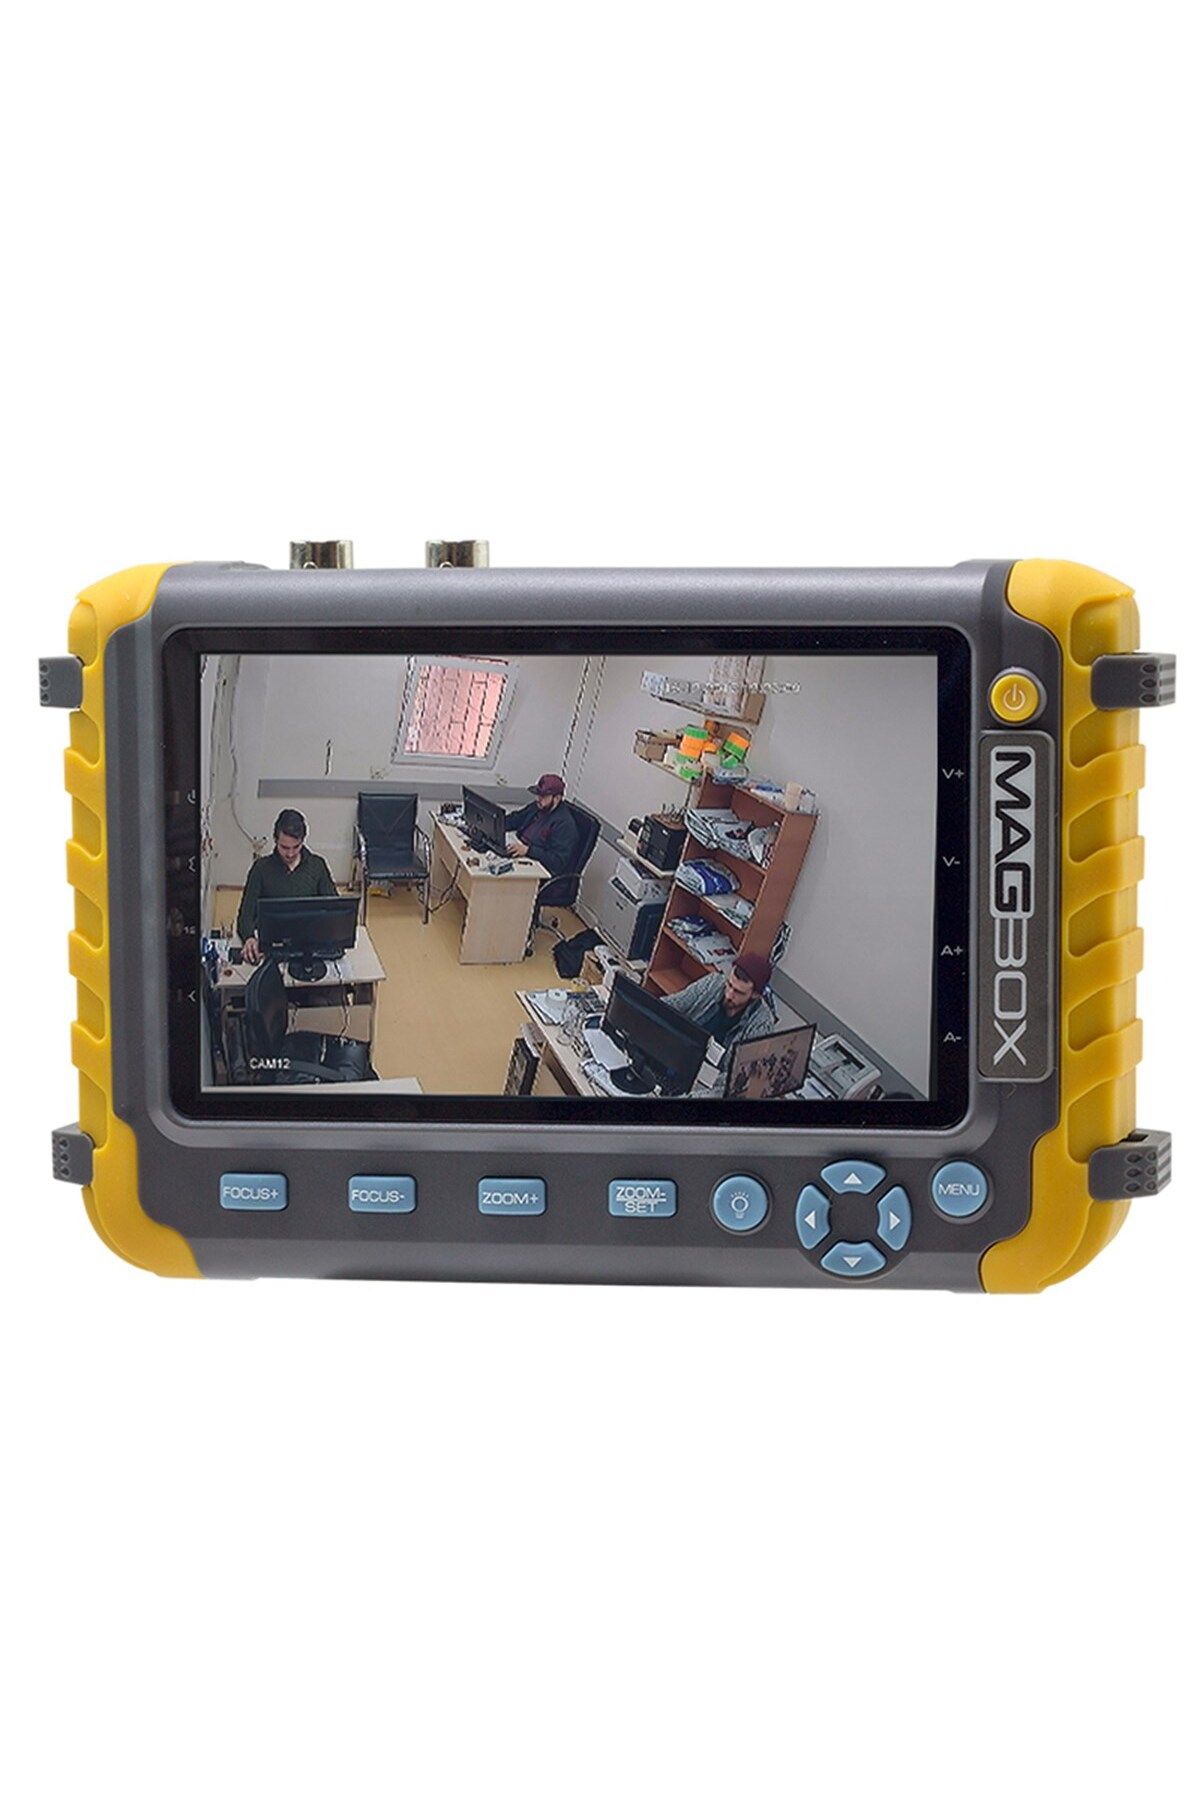 Genel Markalar Ahd Analog Tvı Cctv Kamera Test Cihazı (5 İNÇ EKRAN*FENERLİ)